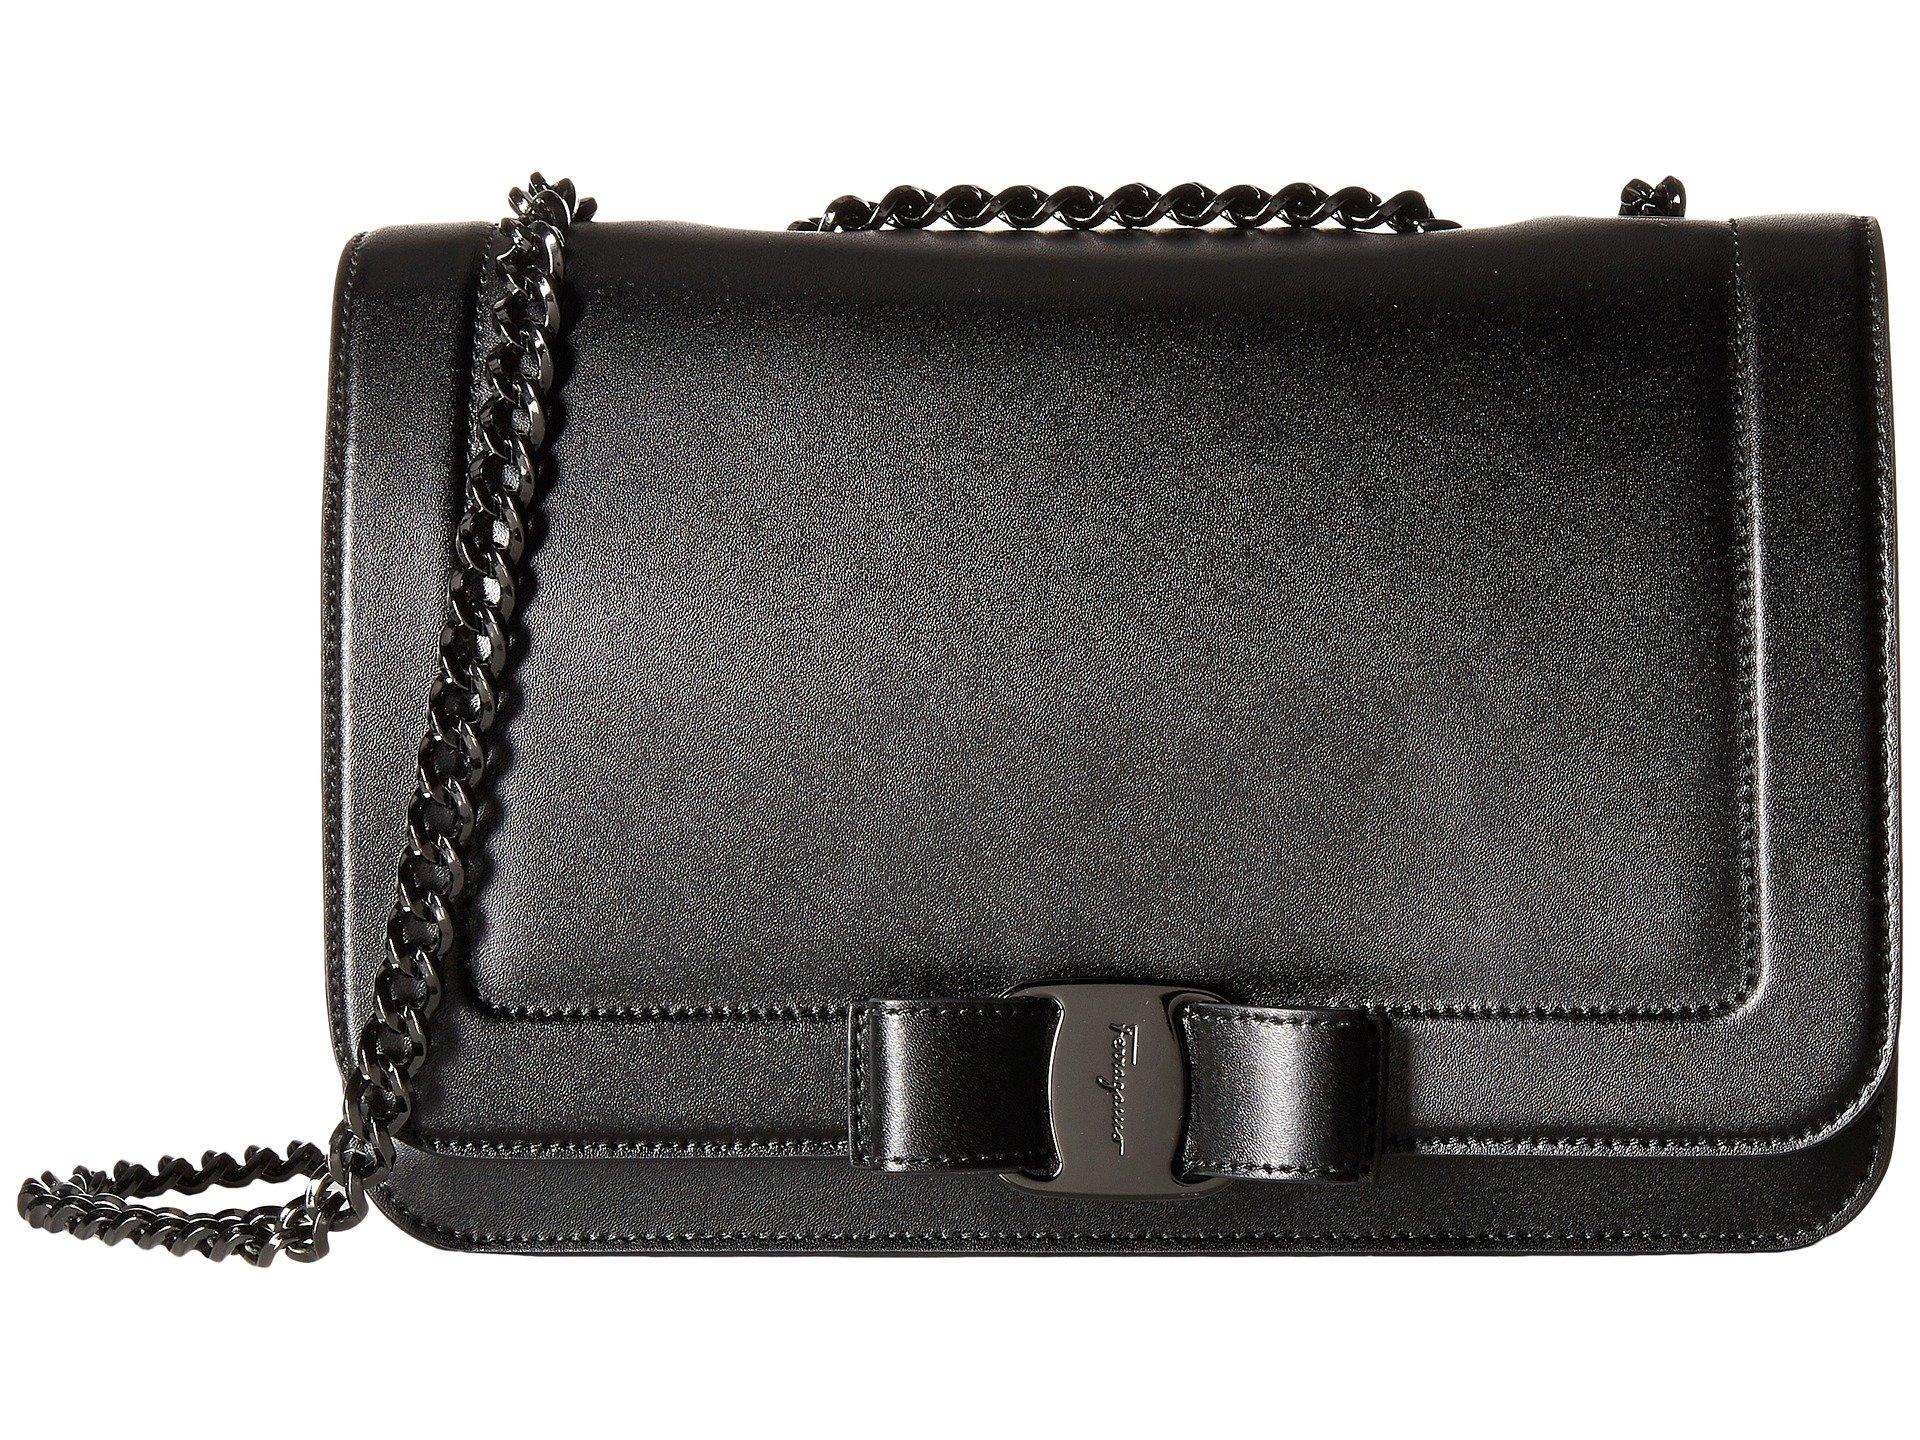 Ferragamo Leather Vara Bow Shoulder Bag in Black - Lyst